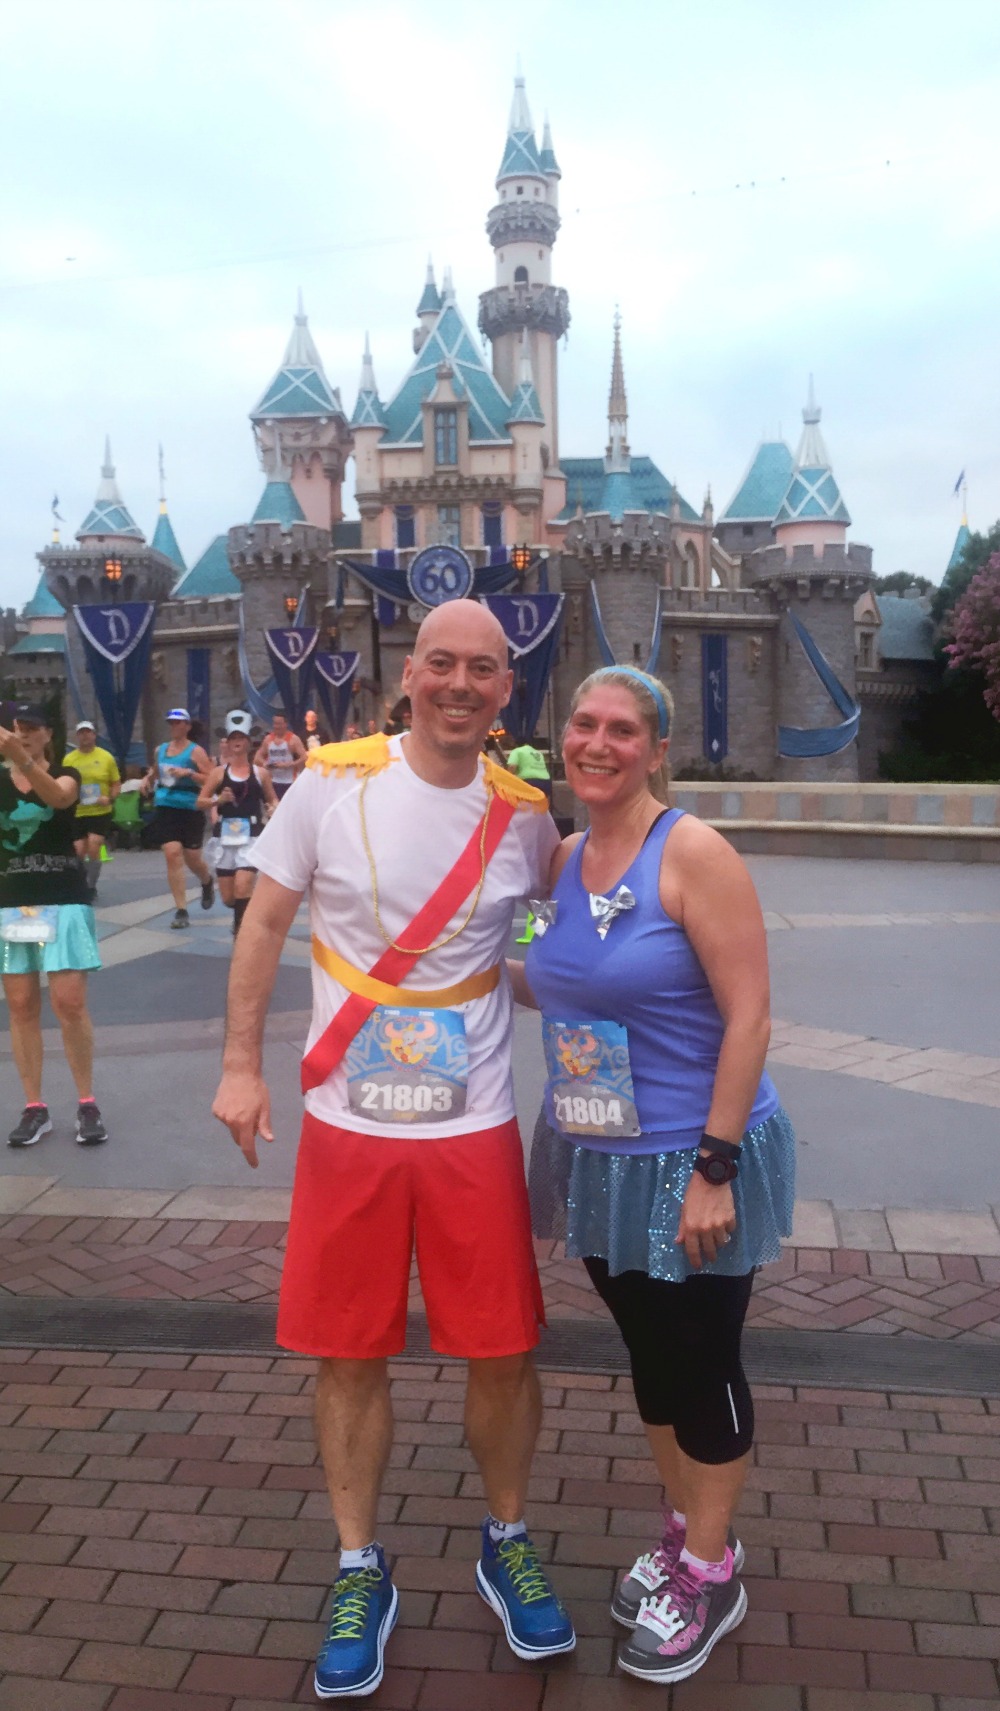 Taking Stock Disneyland - Cinderella and Prince Charming running costume